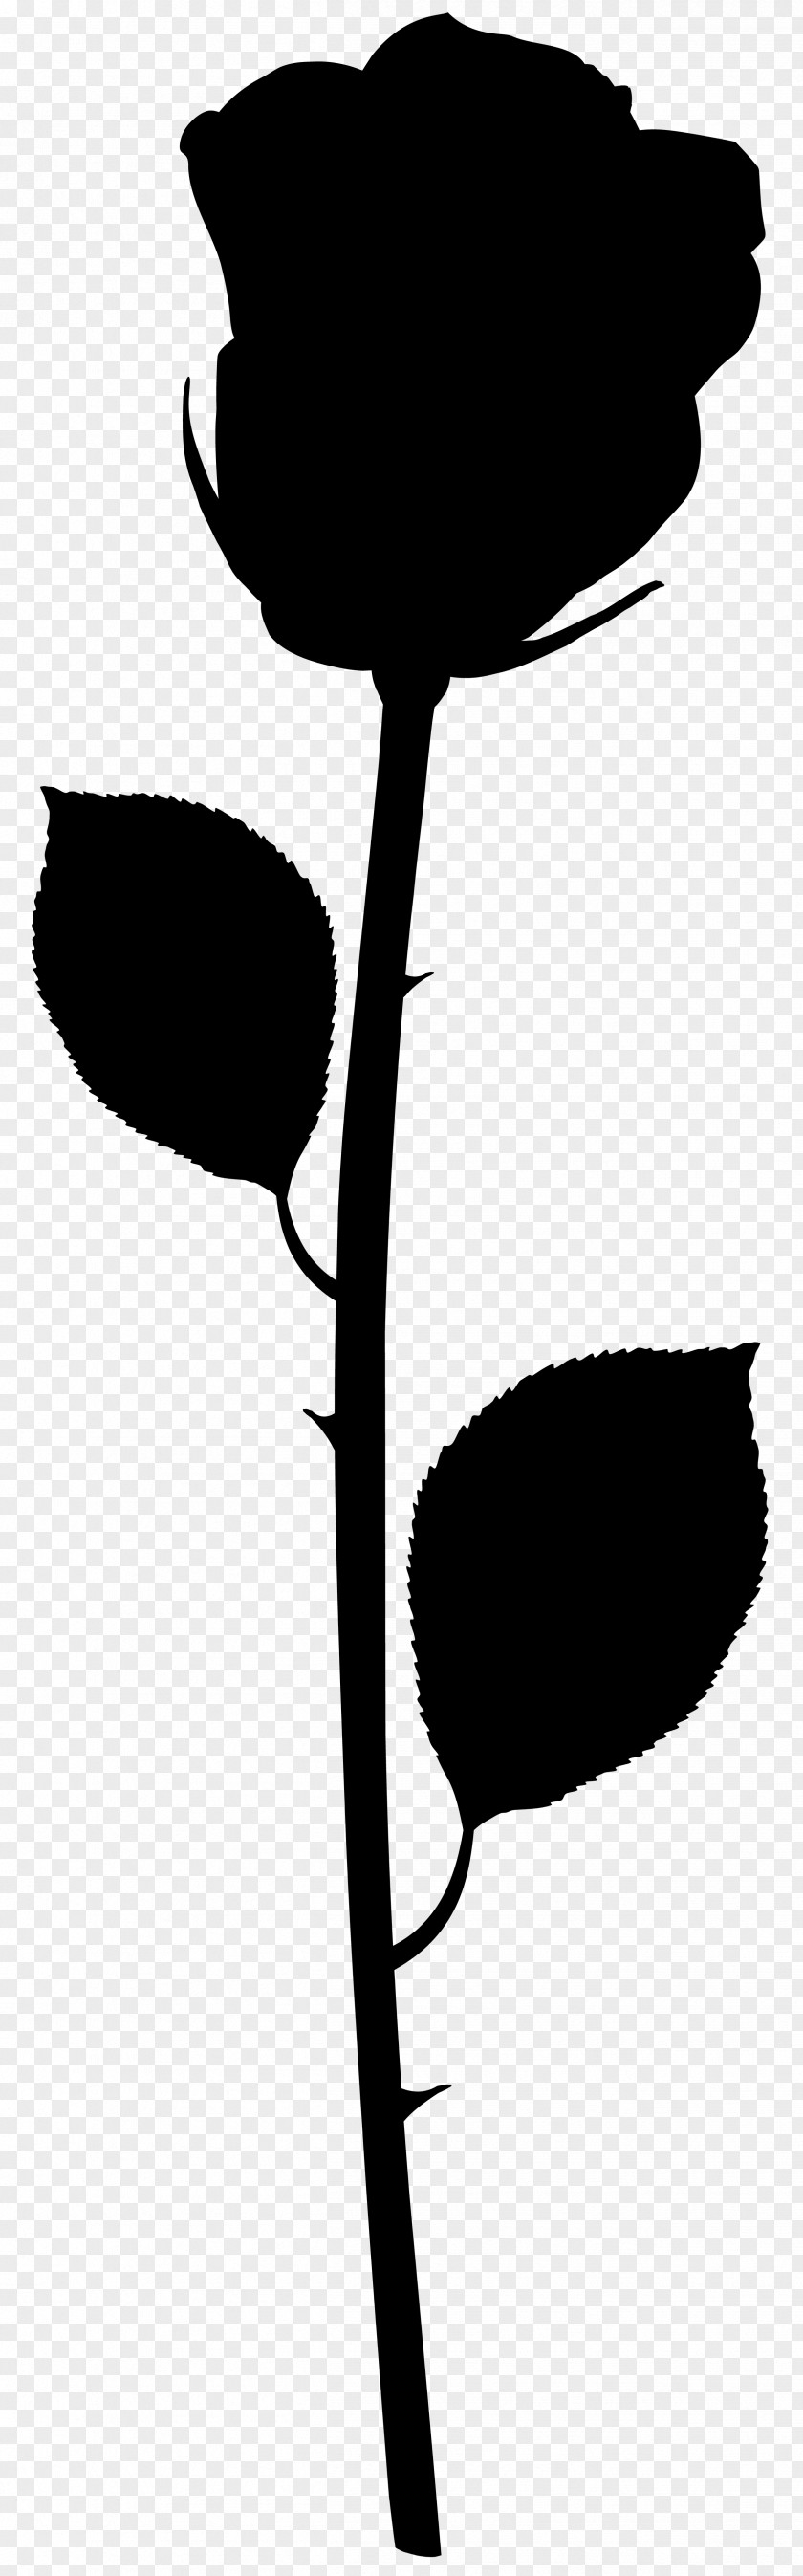 Leaf Clip Art Plant Stem Silhouette Flowering PNG